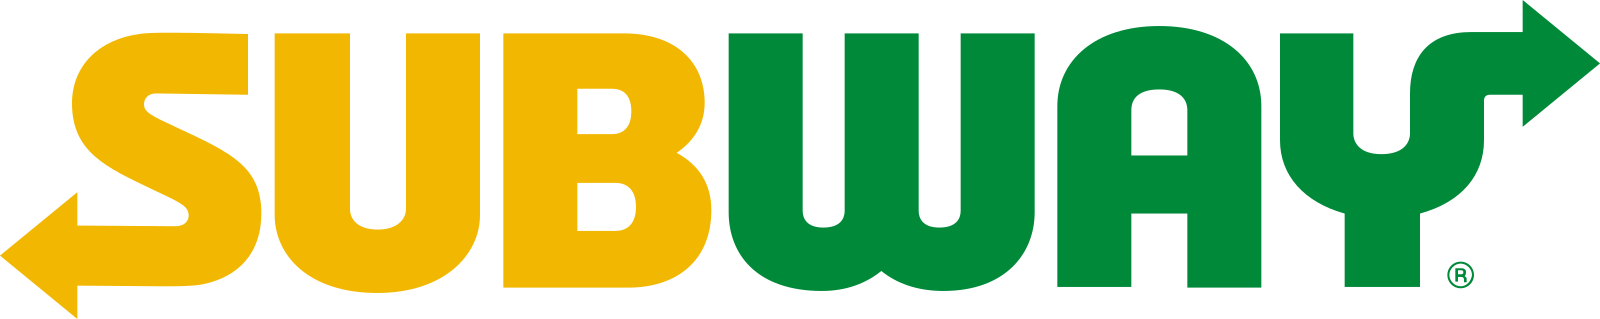 Subway Logo.